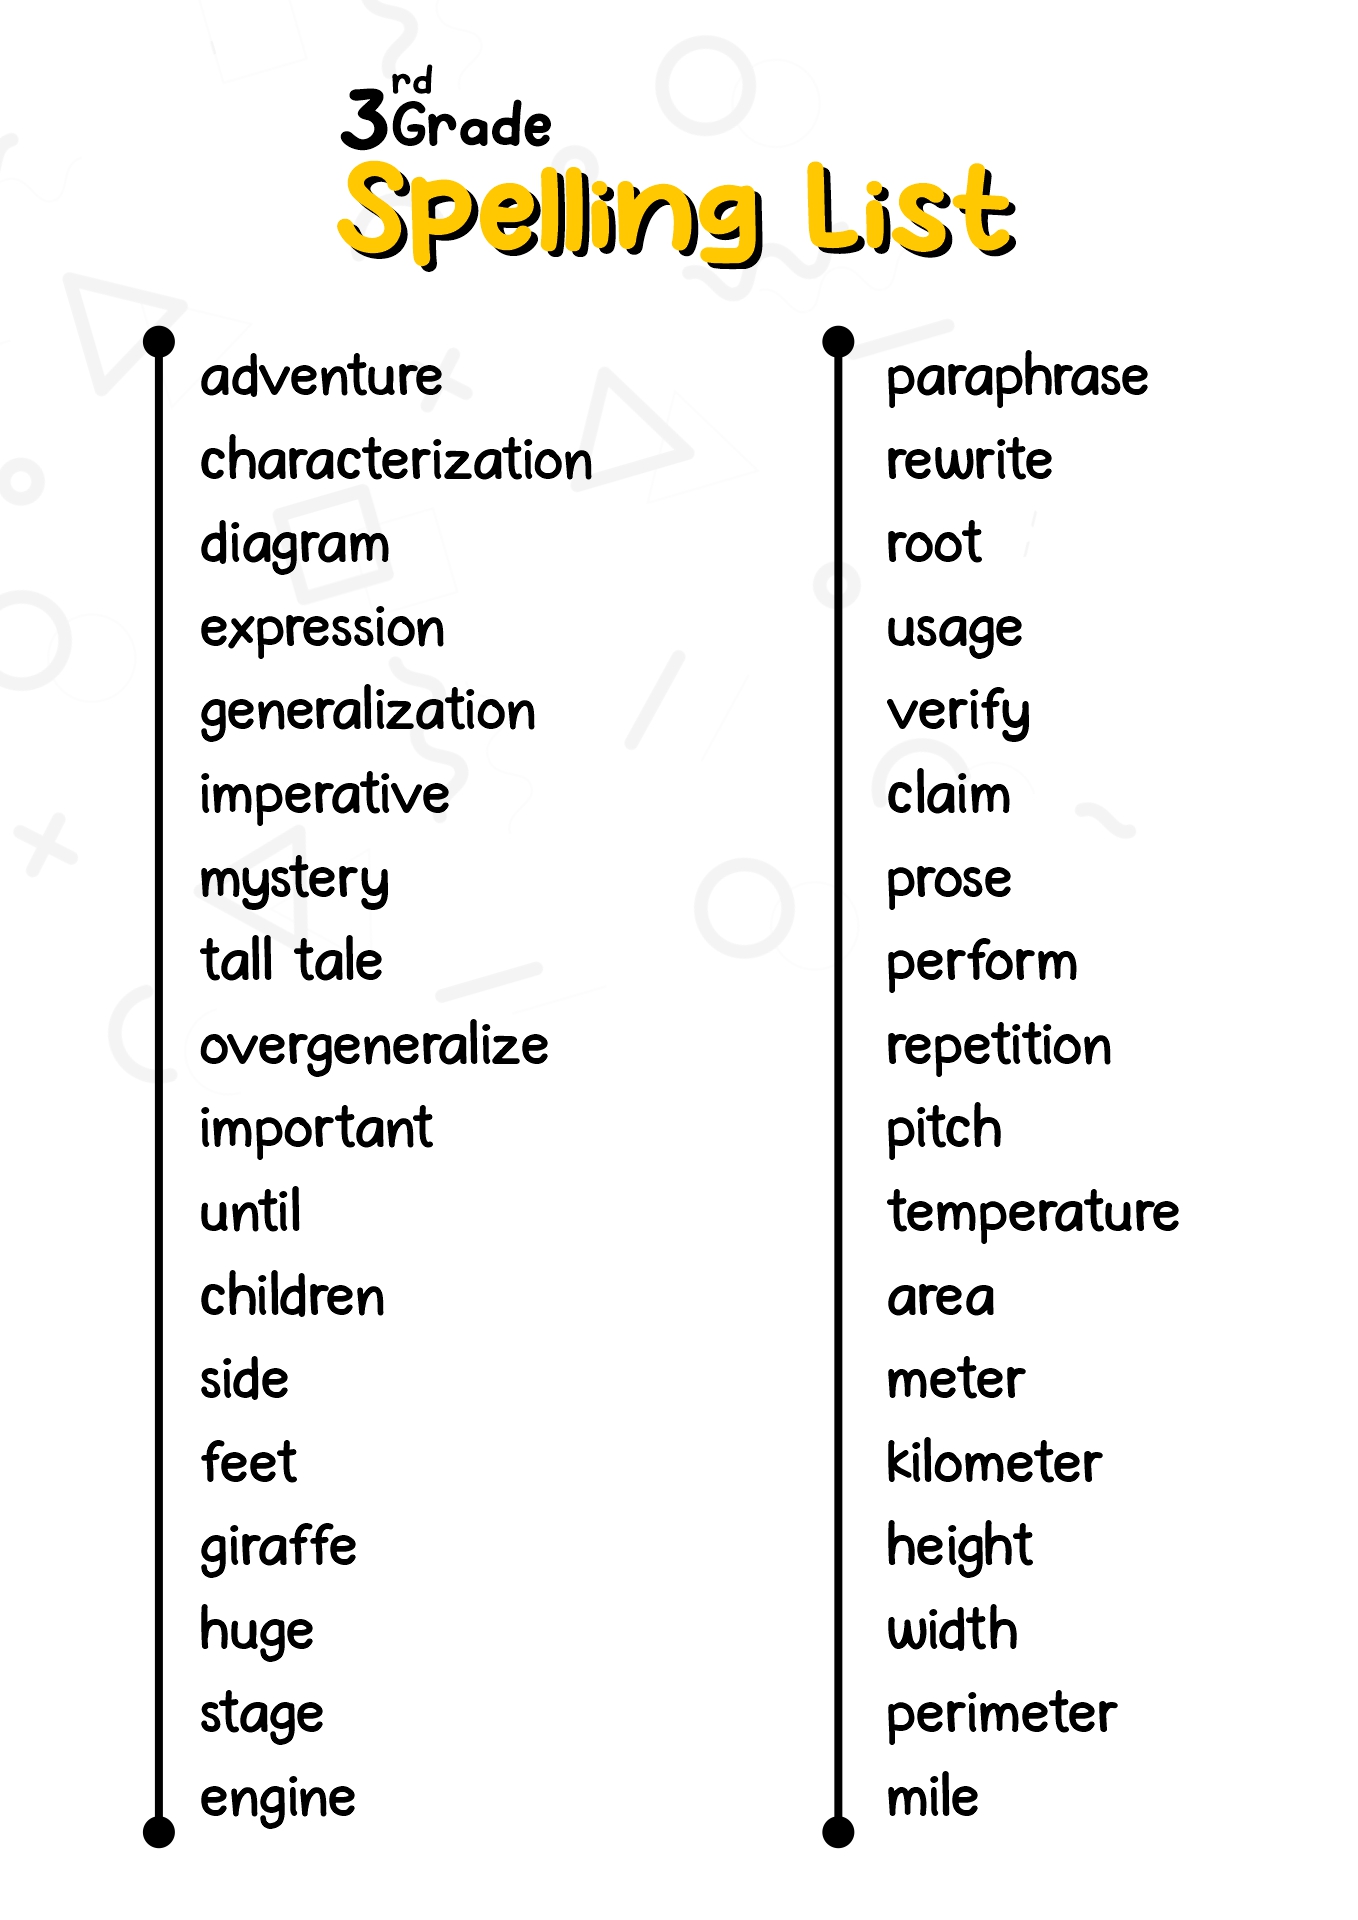 3rd Grade Spelling Bee Word List